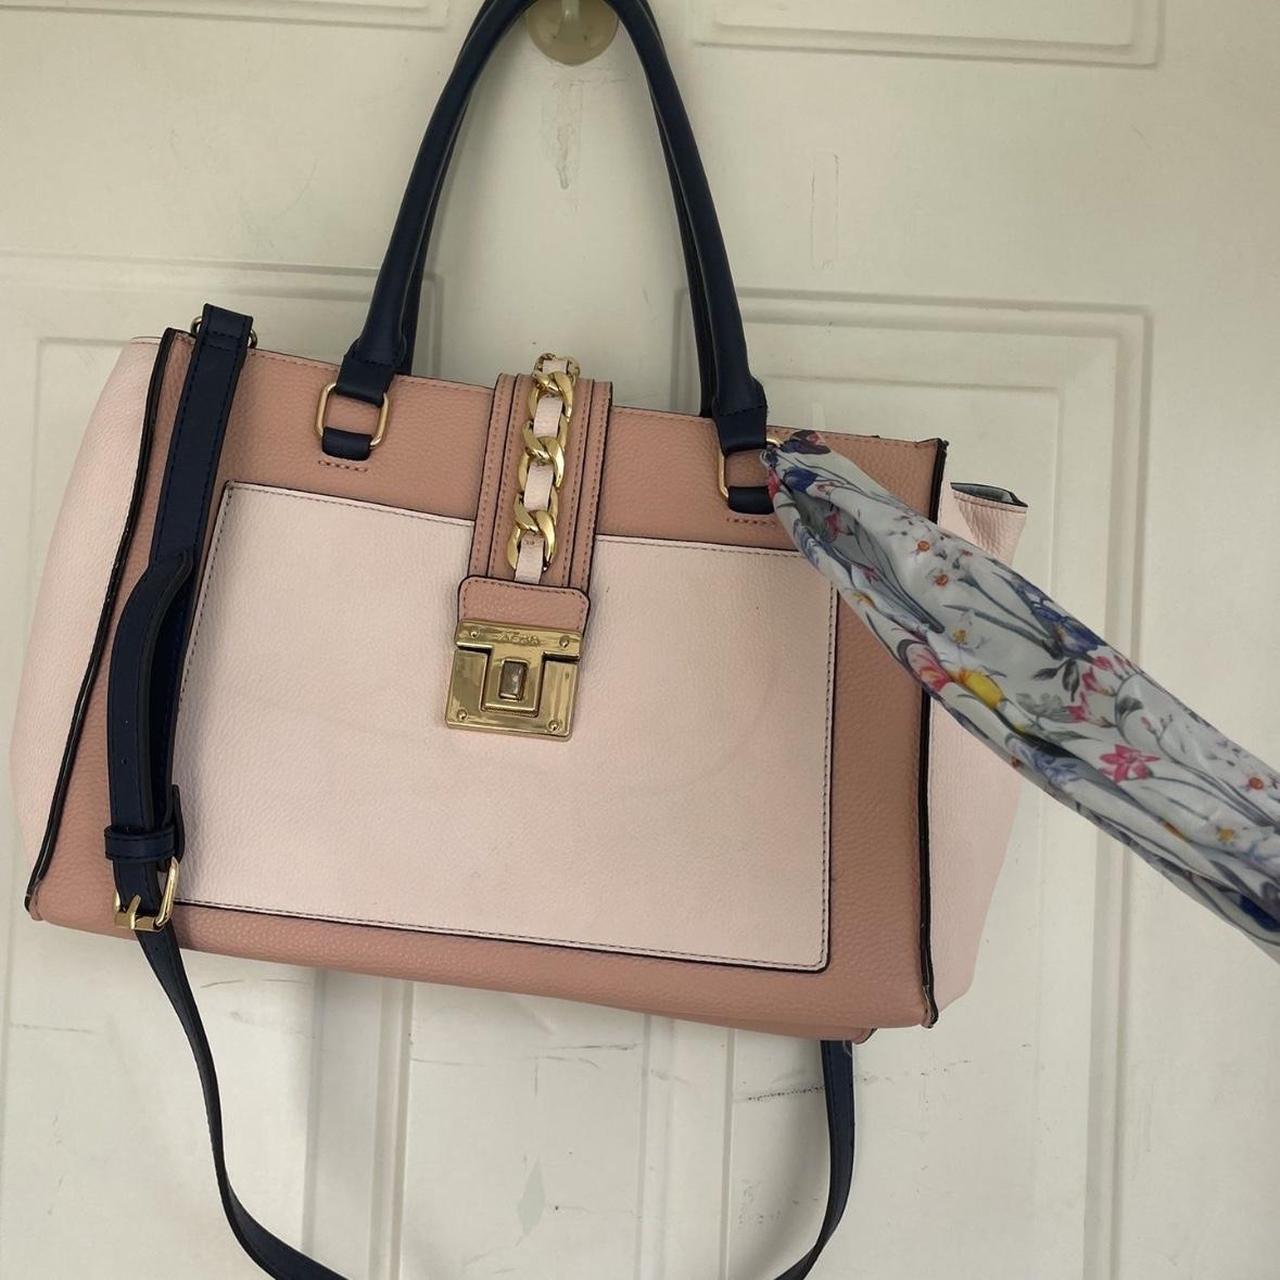 Buy Aldo Pink Tote Bag (Set of 2) online